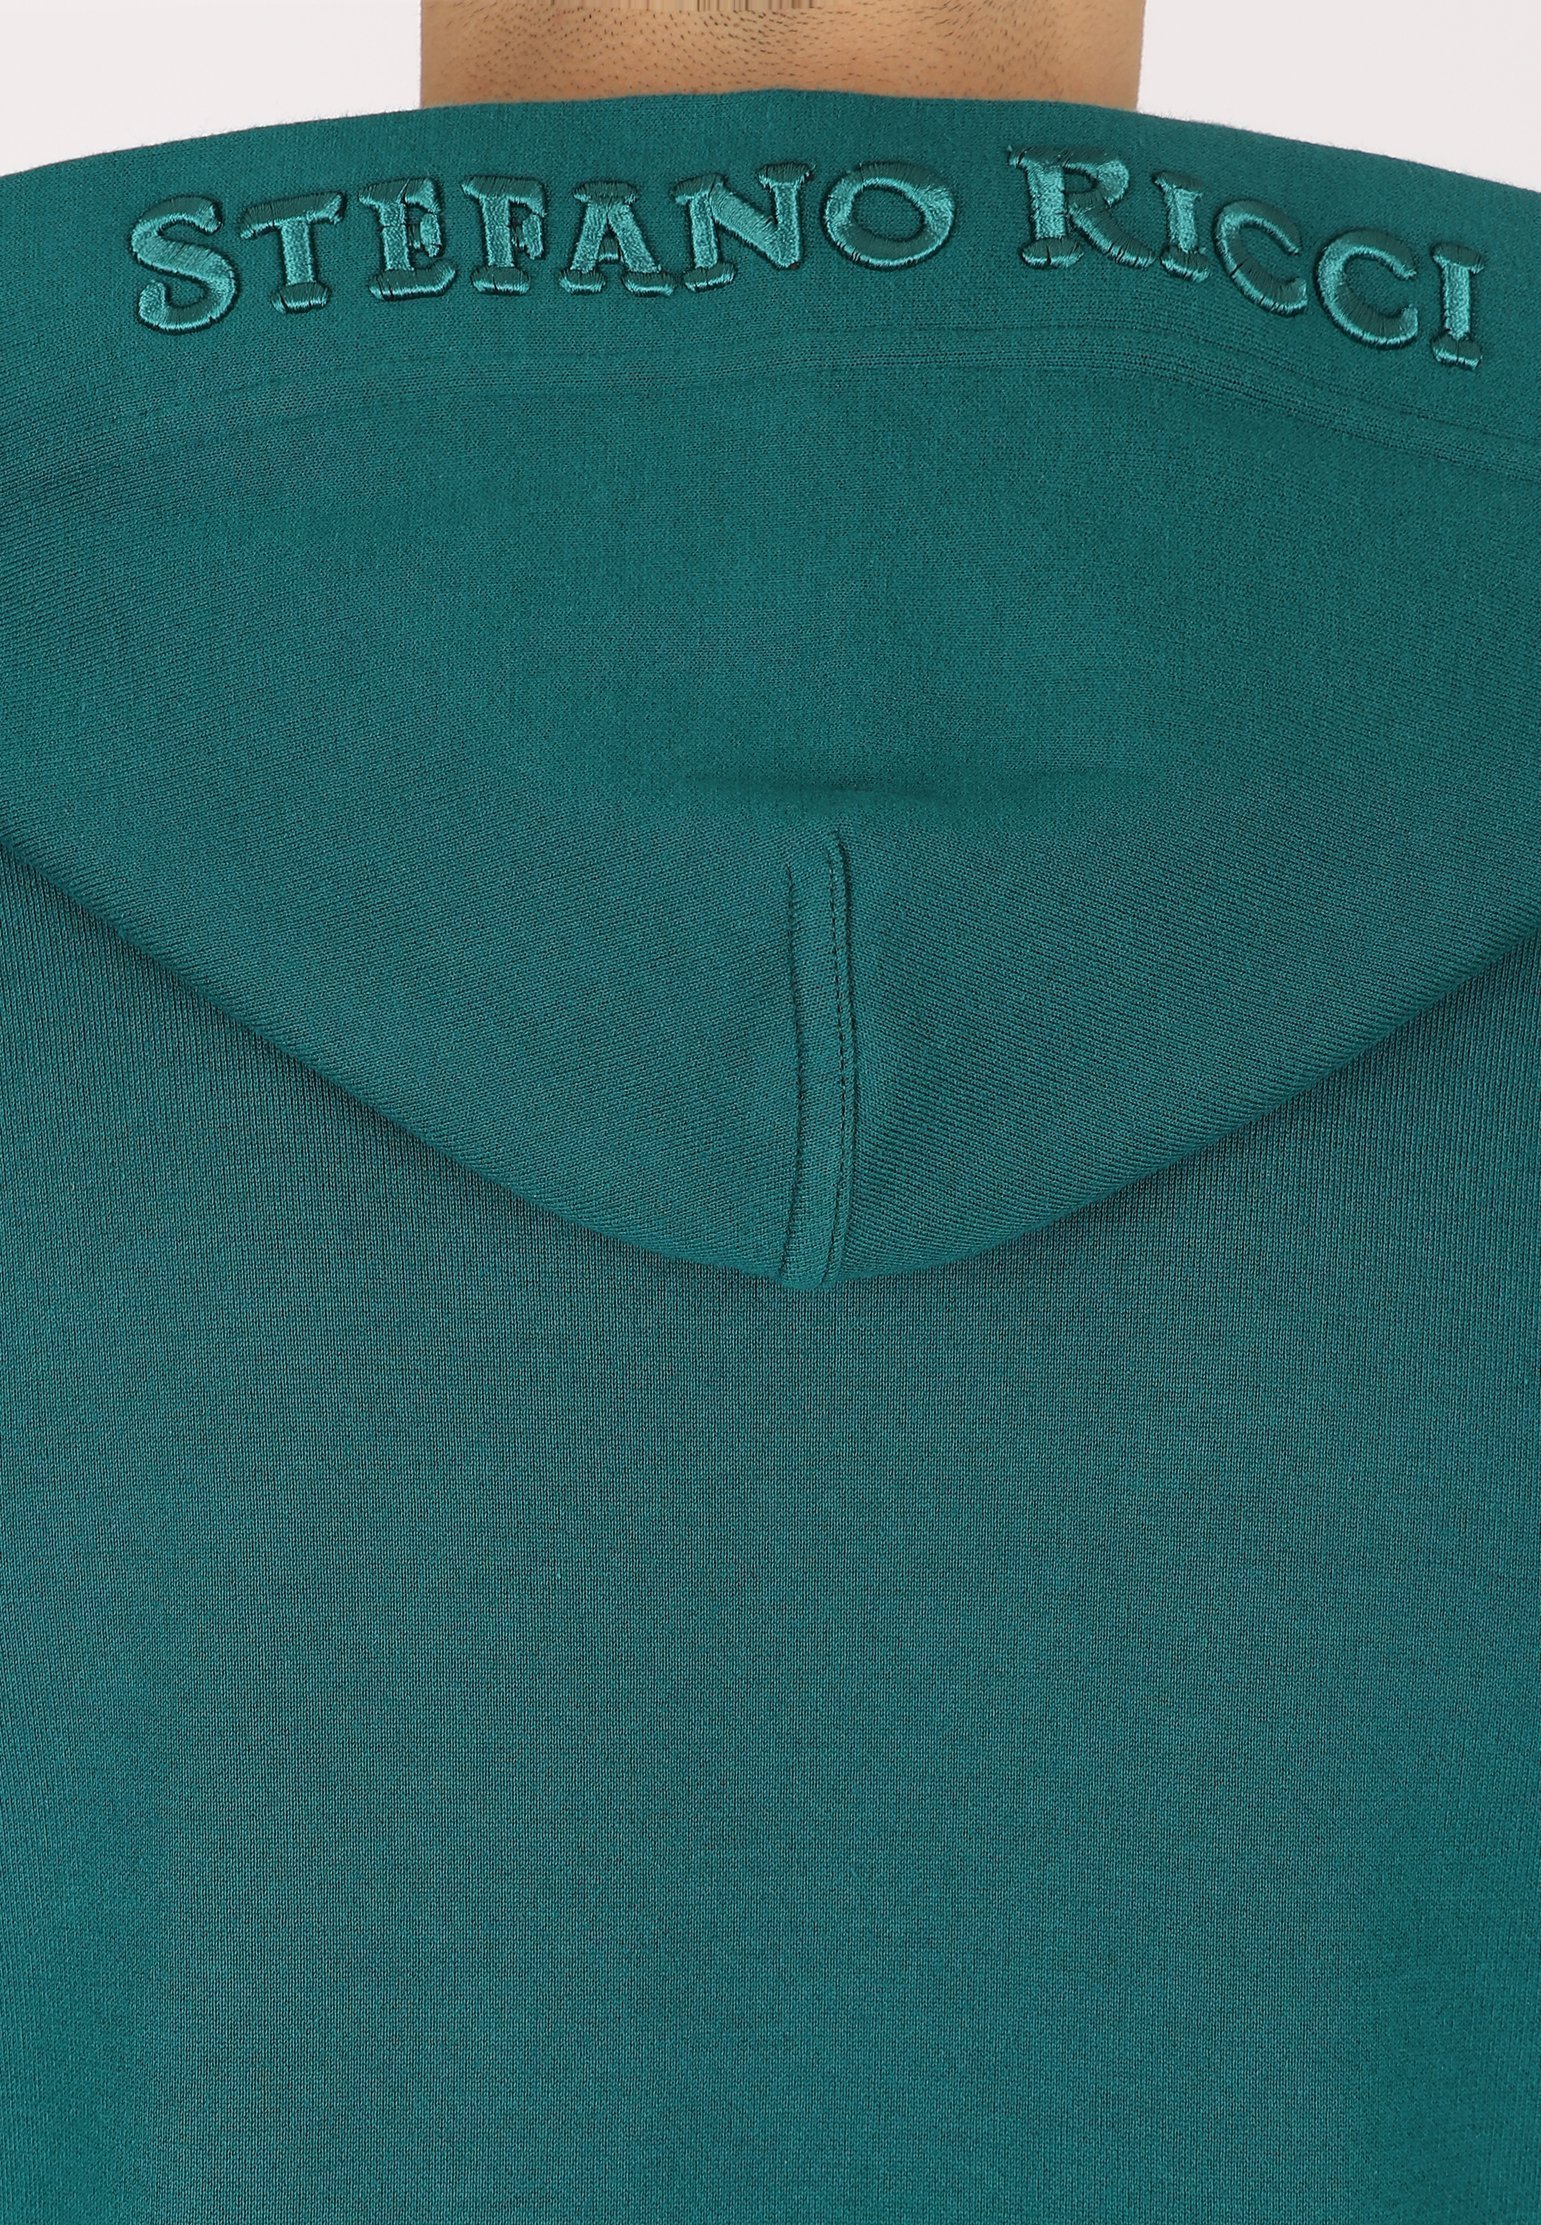 Hoodie STEFANO RICCI Color: vert (Code: 390) in online store Allure